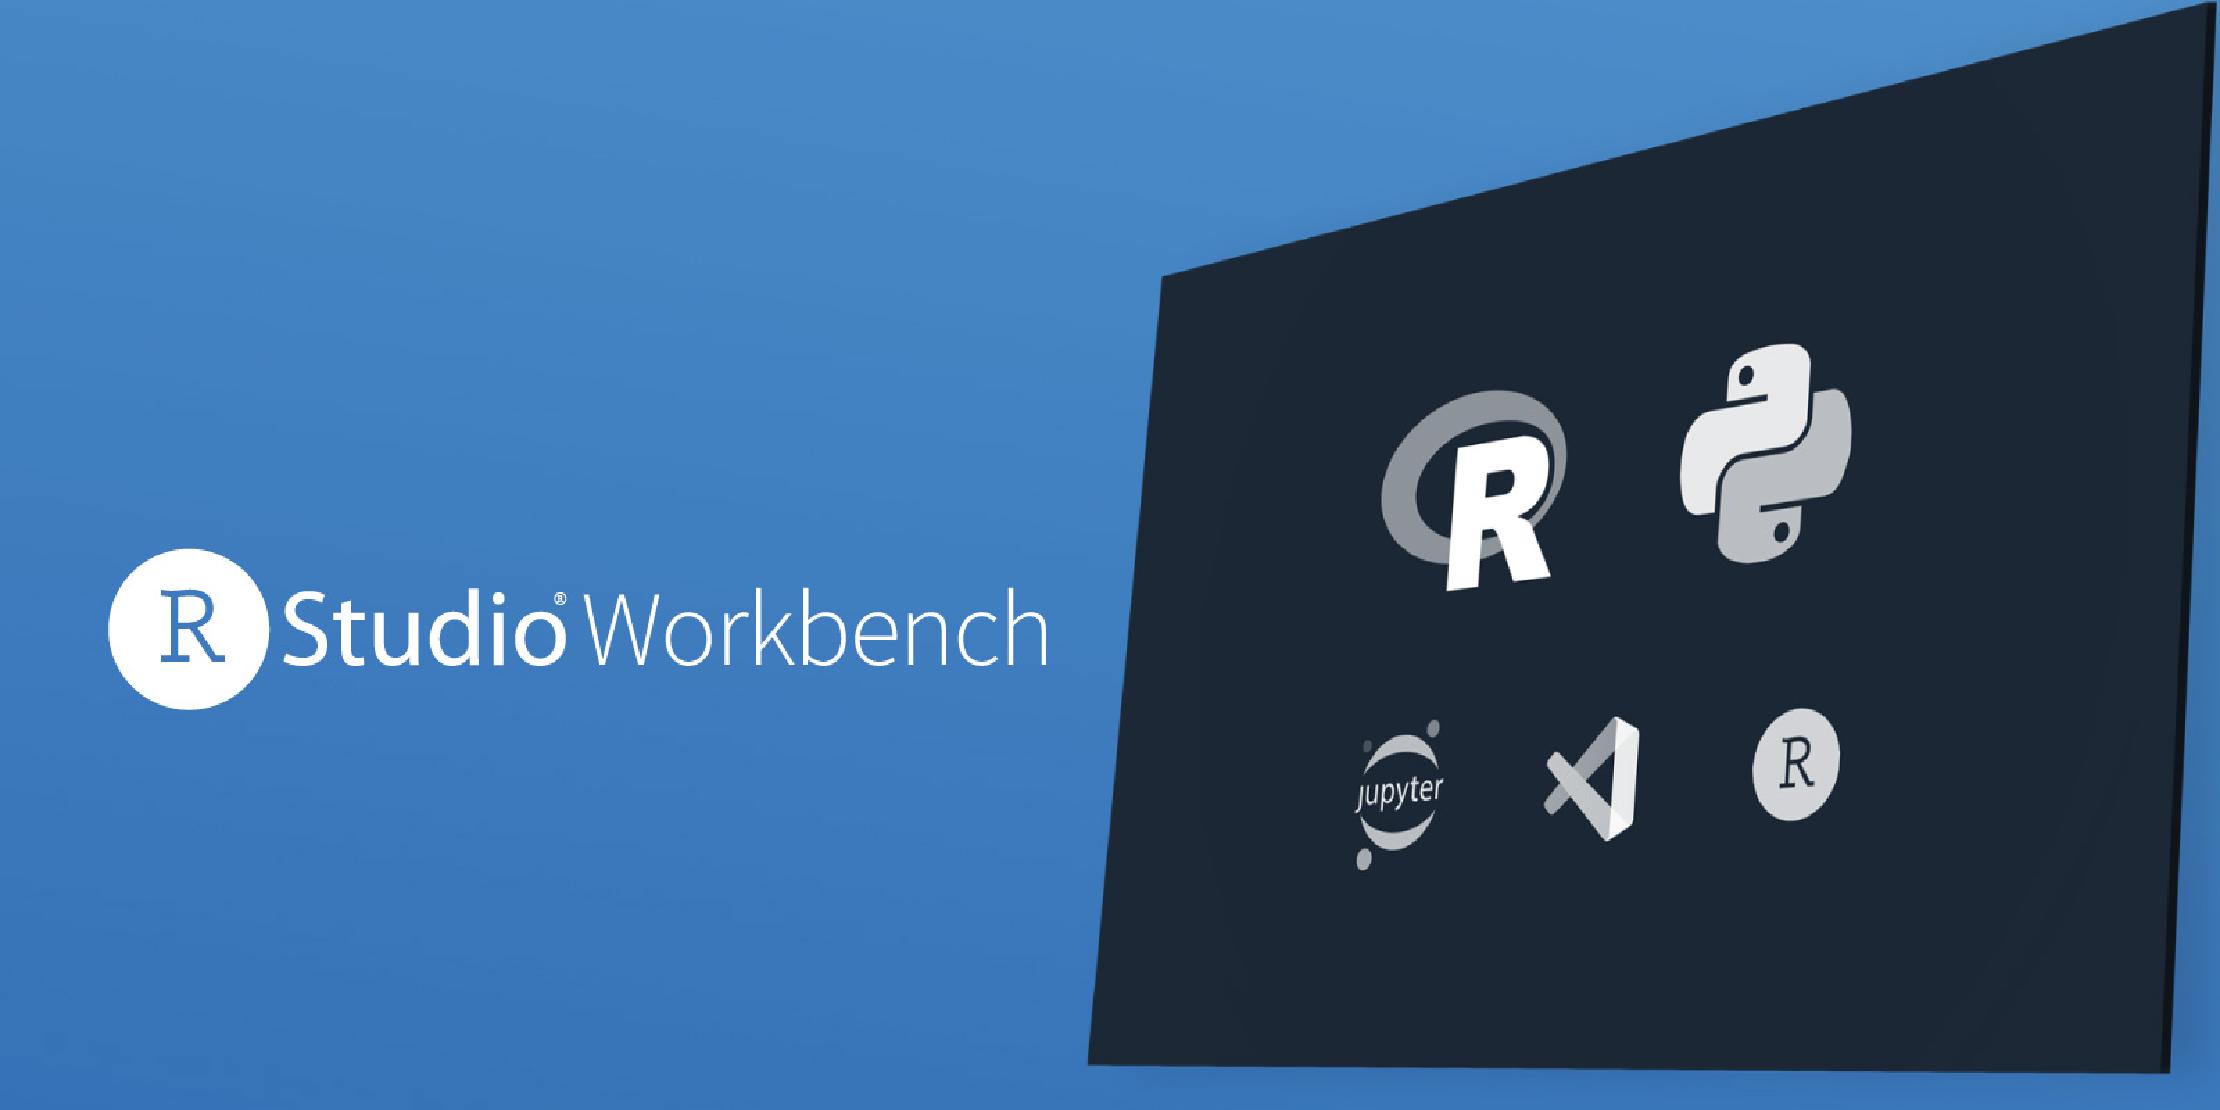 Thumbnail RStudio Workbench logo